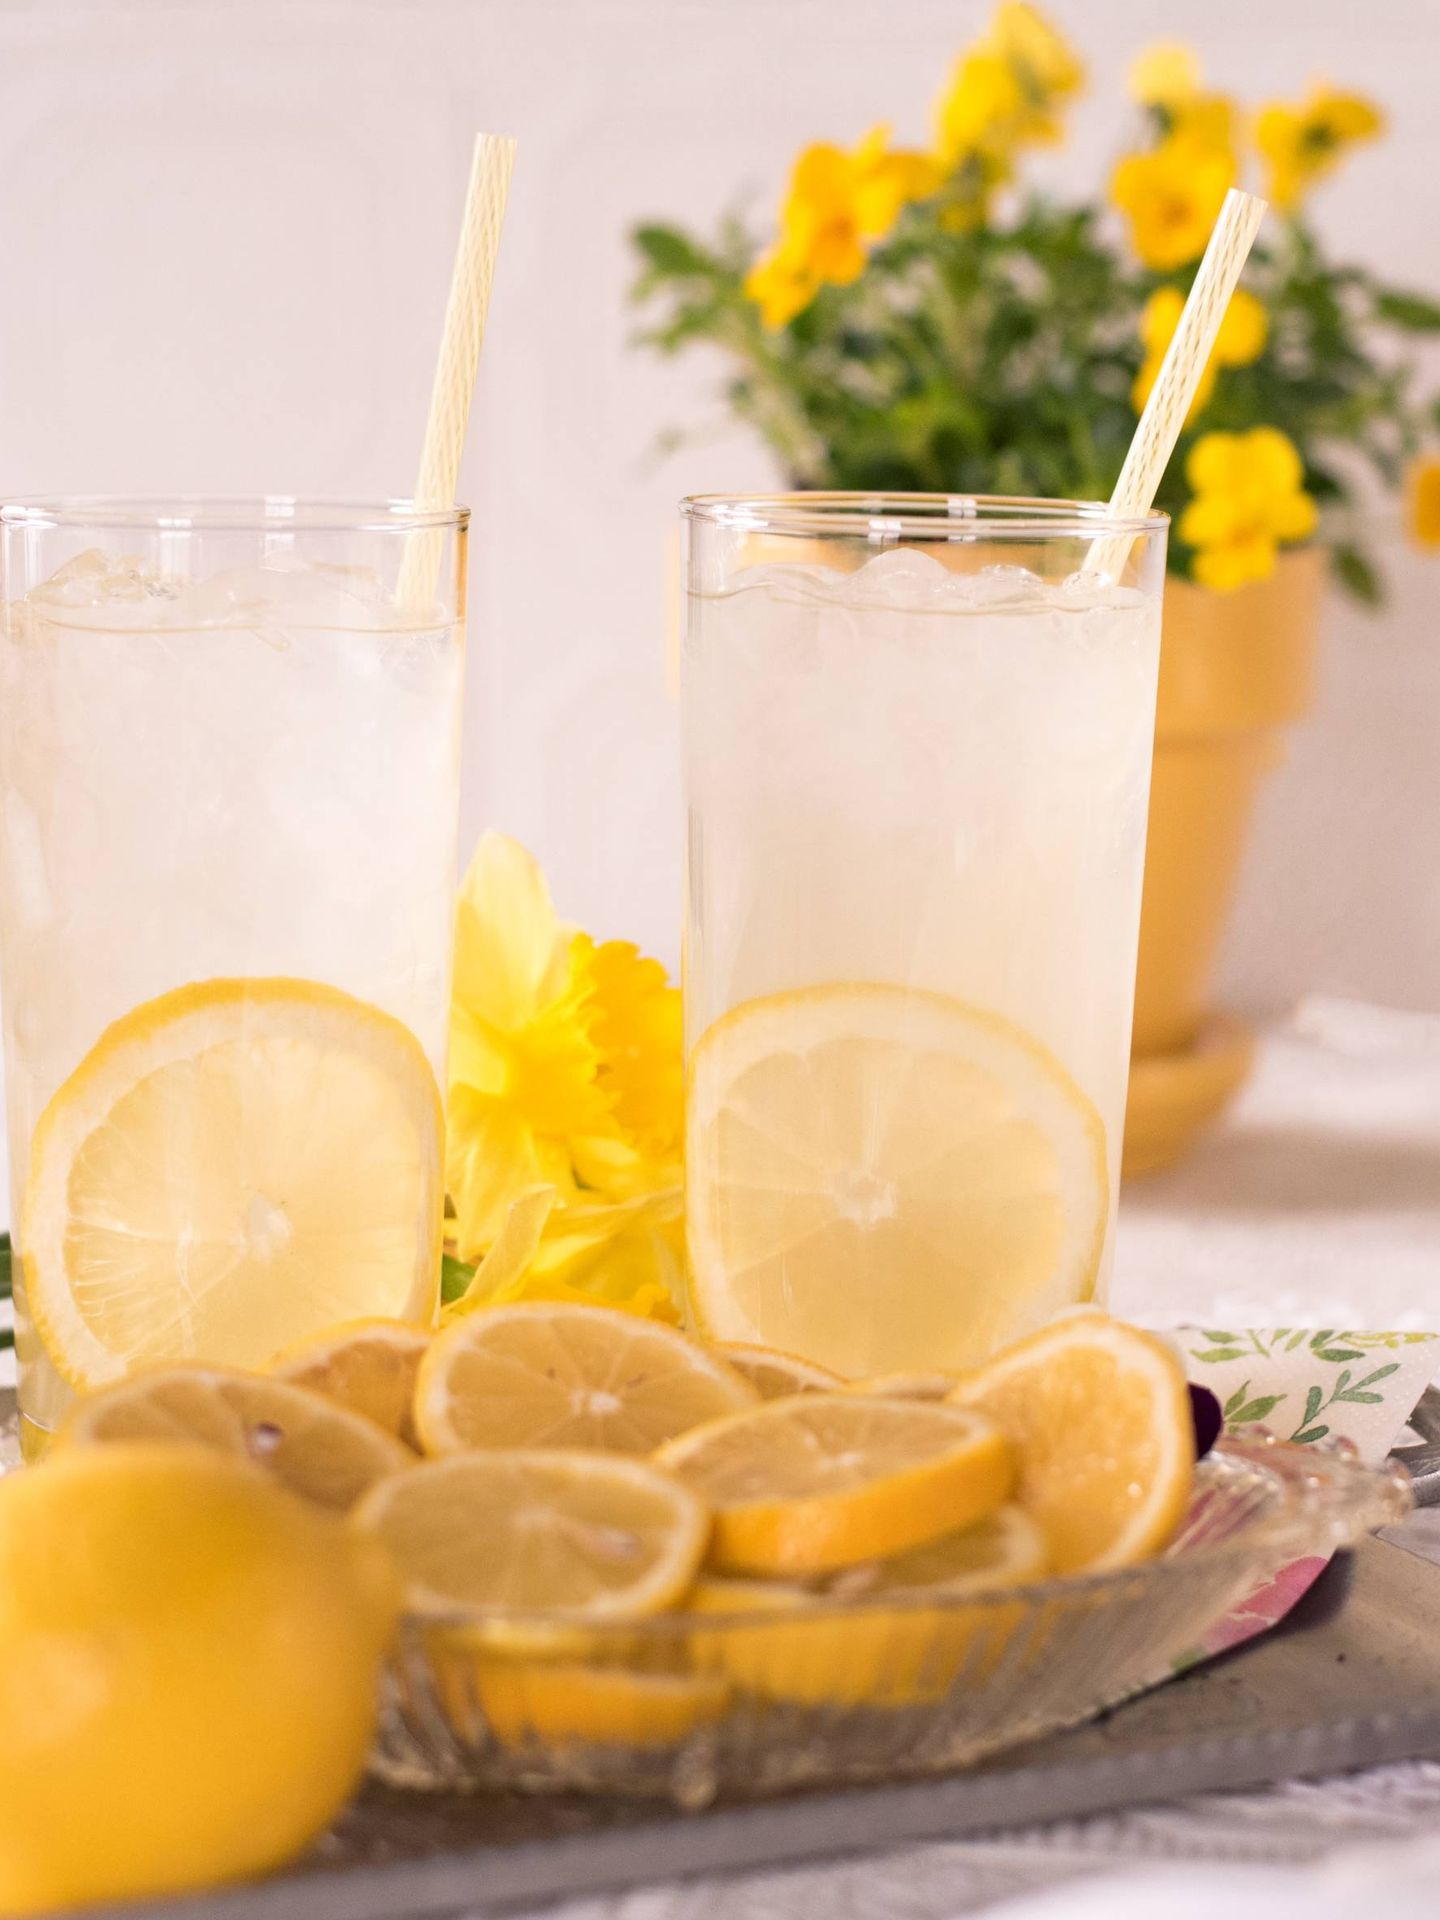 La limonada es la base de la dieta de la dieta del limón. (Charity Beth Long para Unsplash)